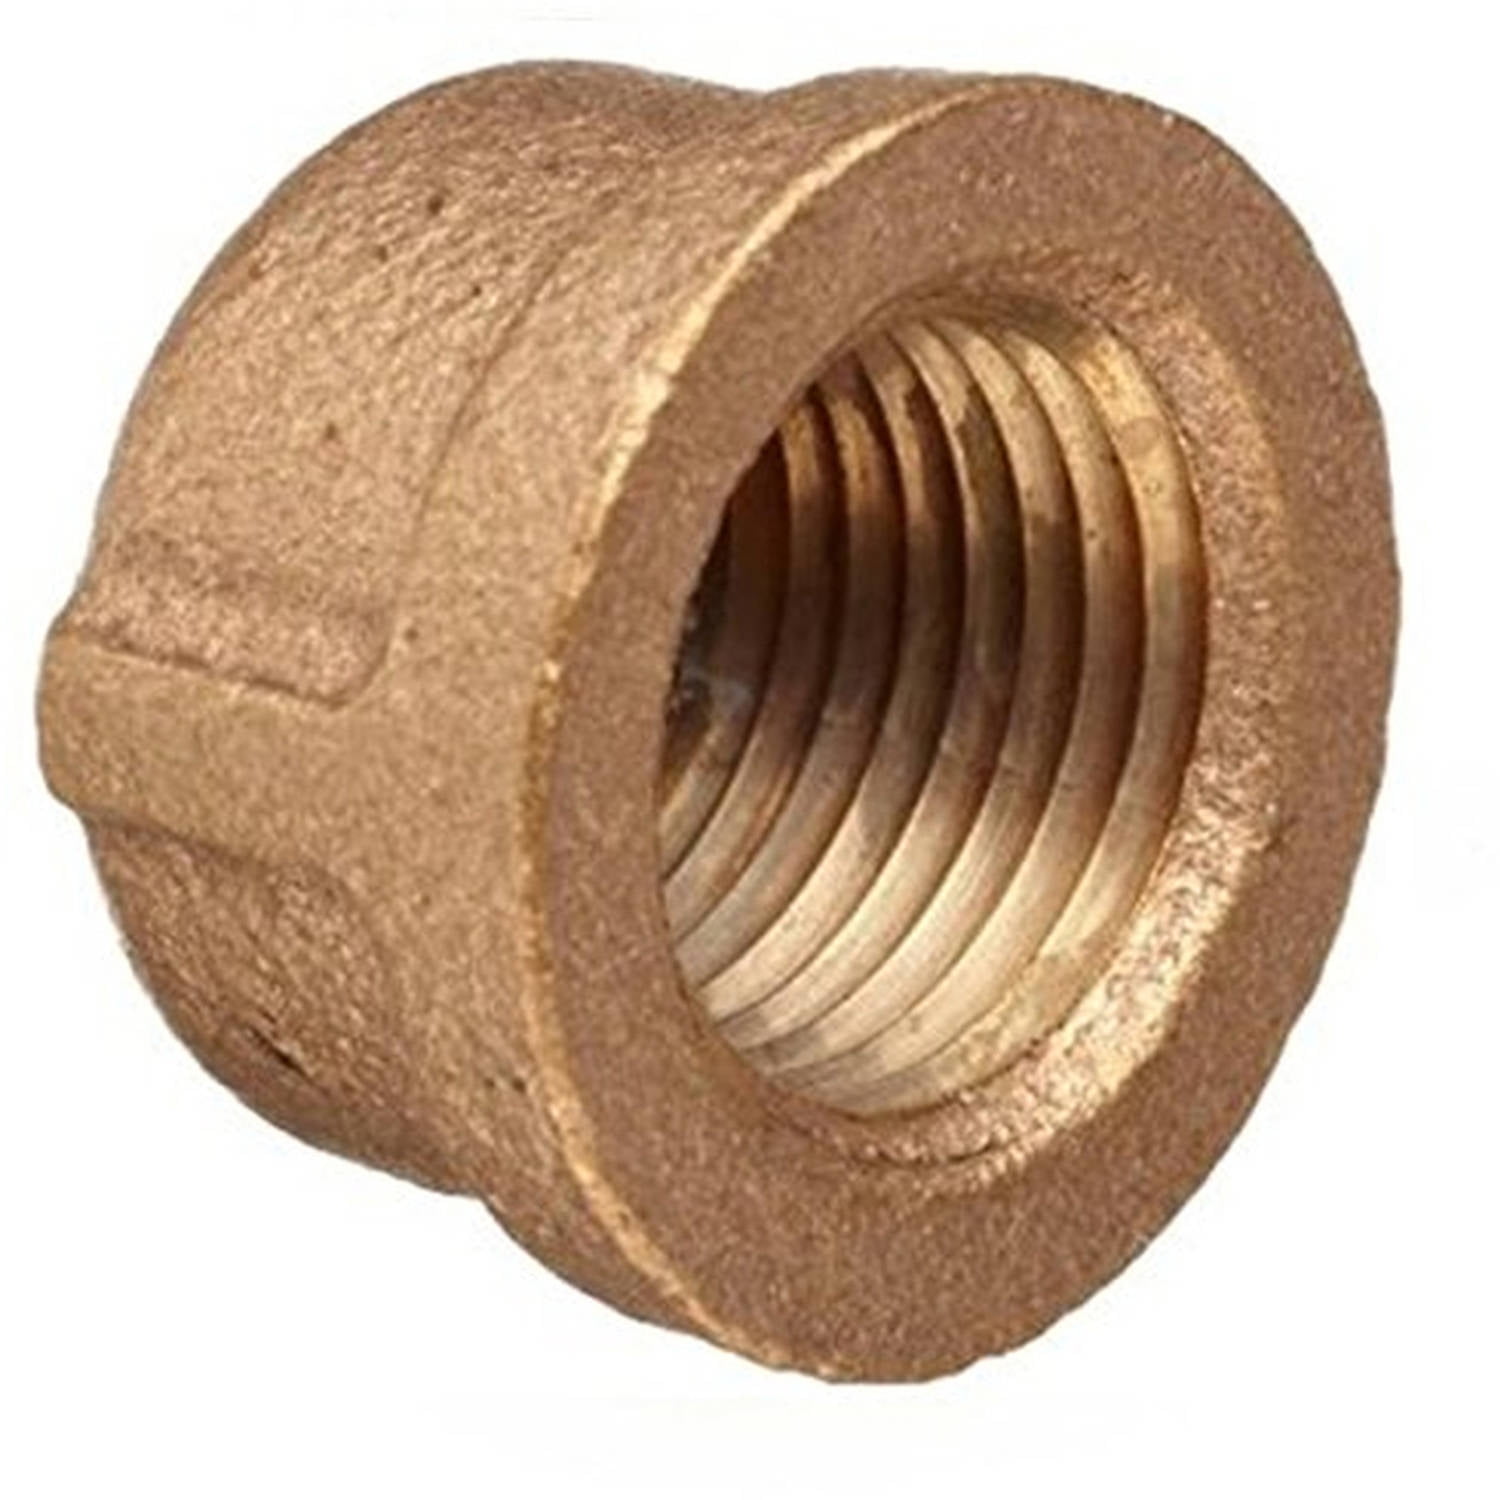 1-1/2" Brass Cap Fitting Plumbing Thread 